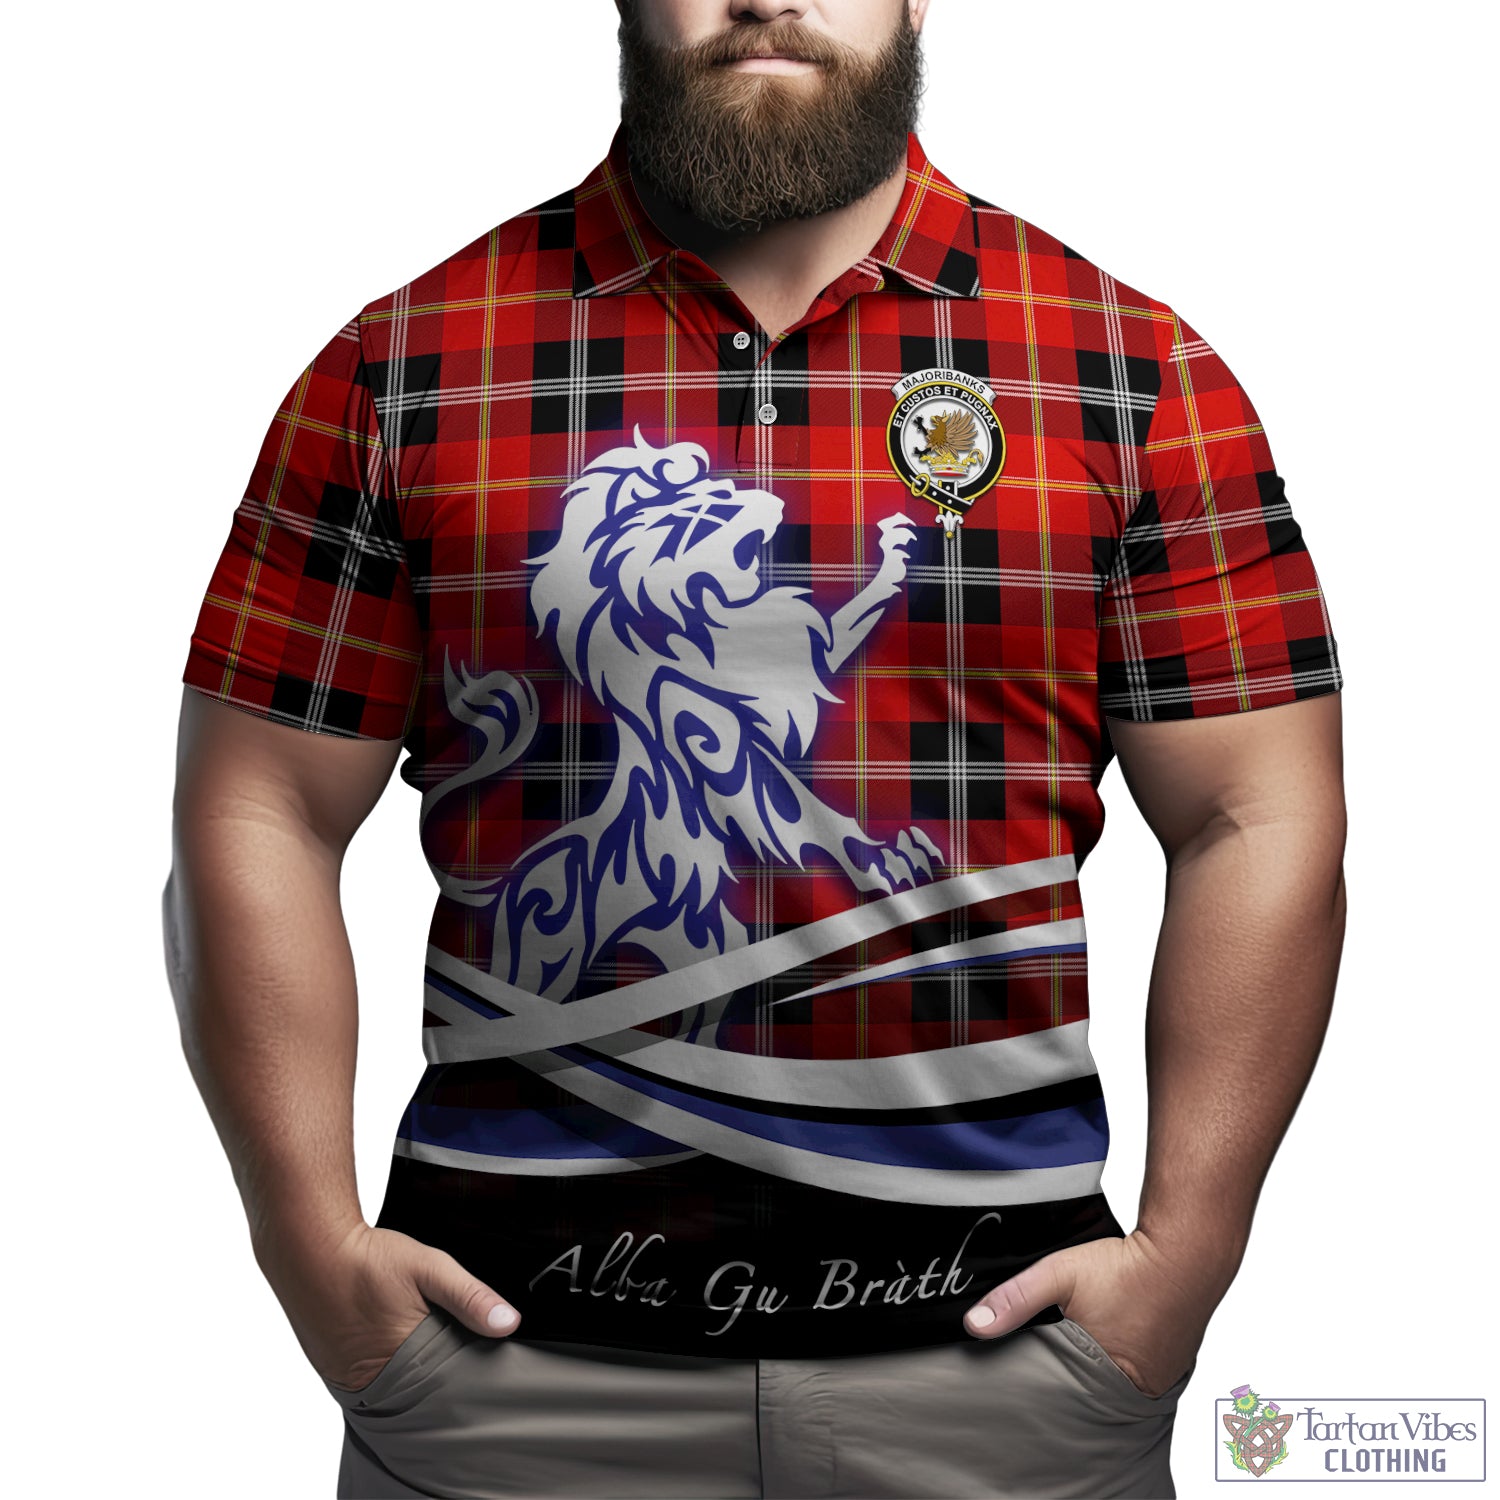 majoribanks-tartan-polo-shirt-with-alba-gu-brath-regal-lion-emblem